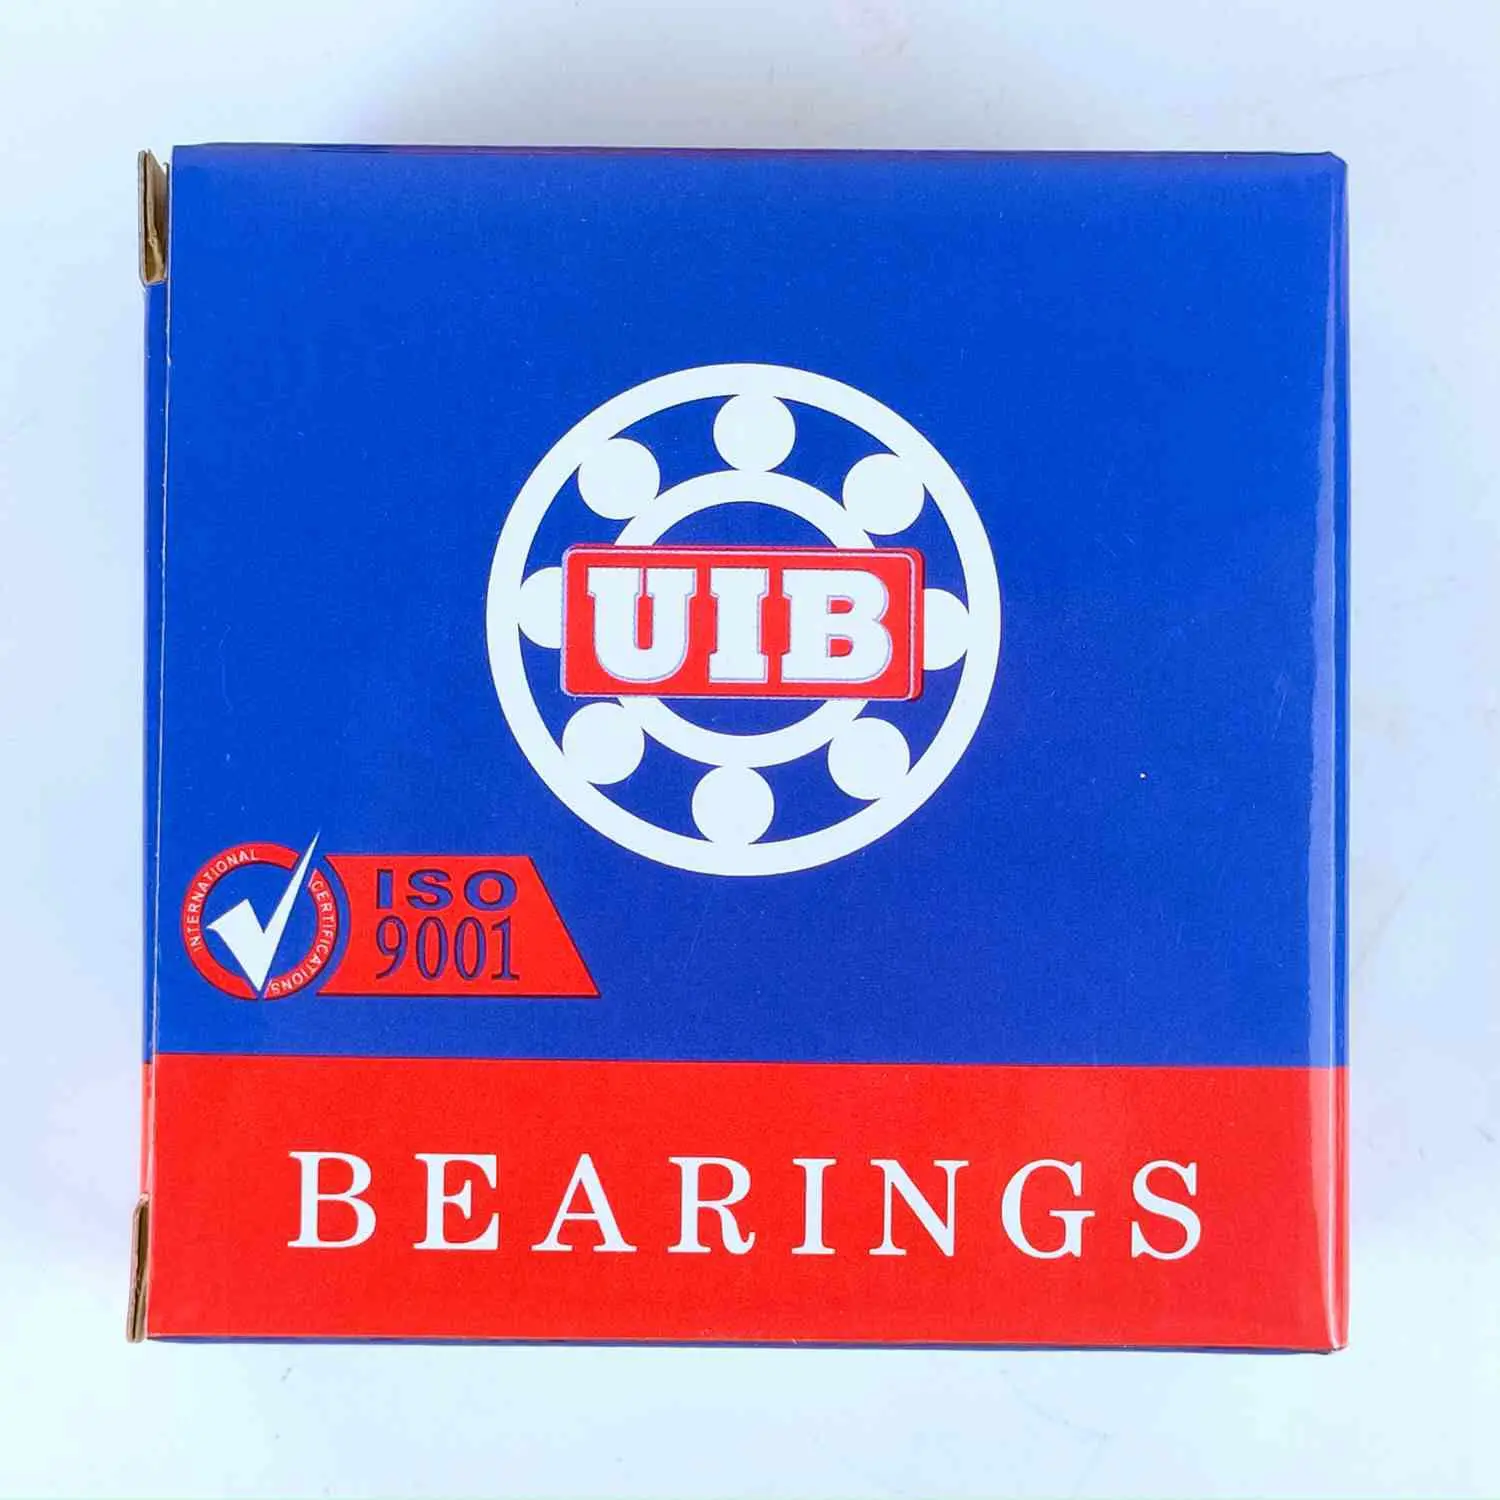 UIB bearing